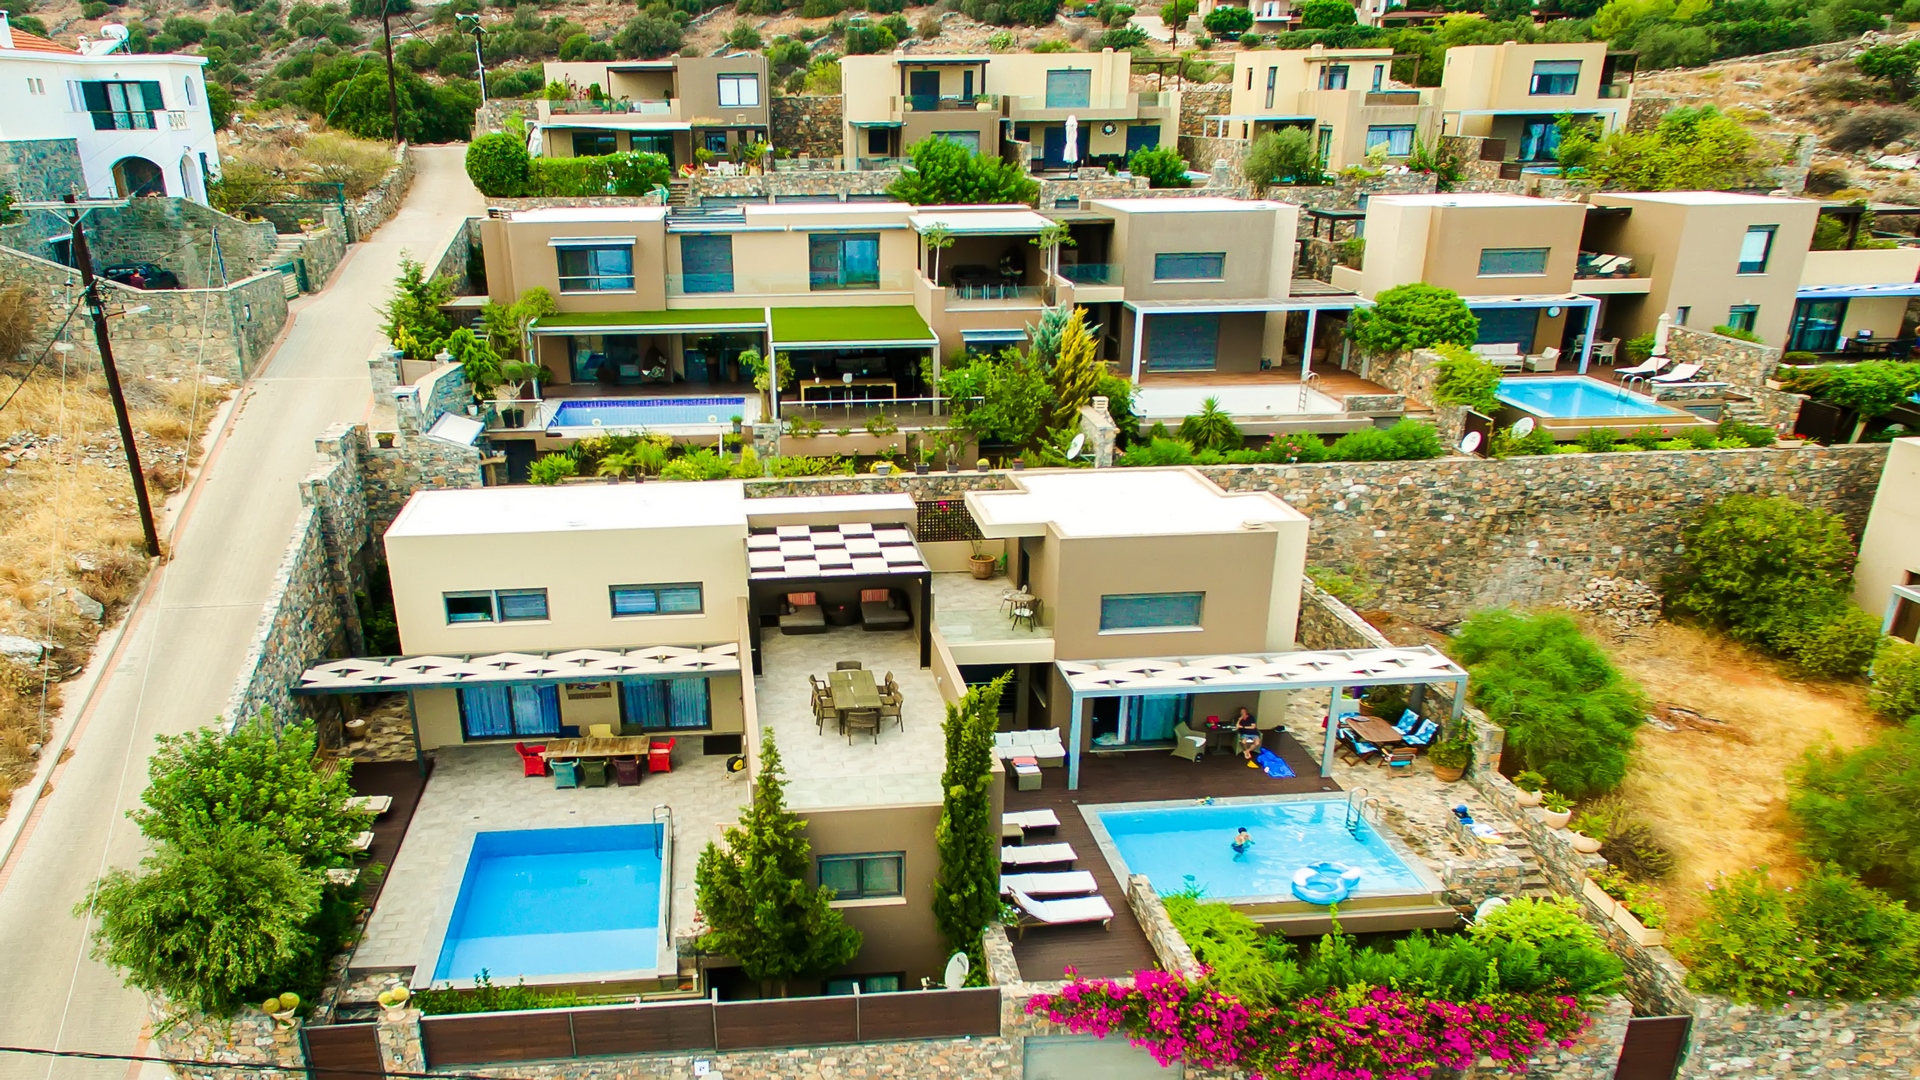 House on Crete island